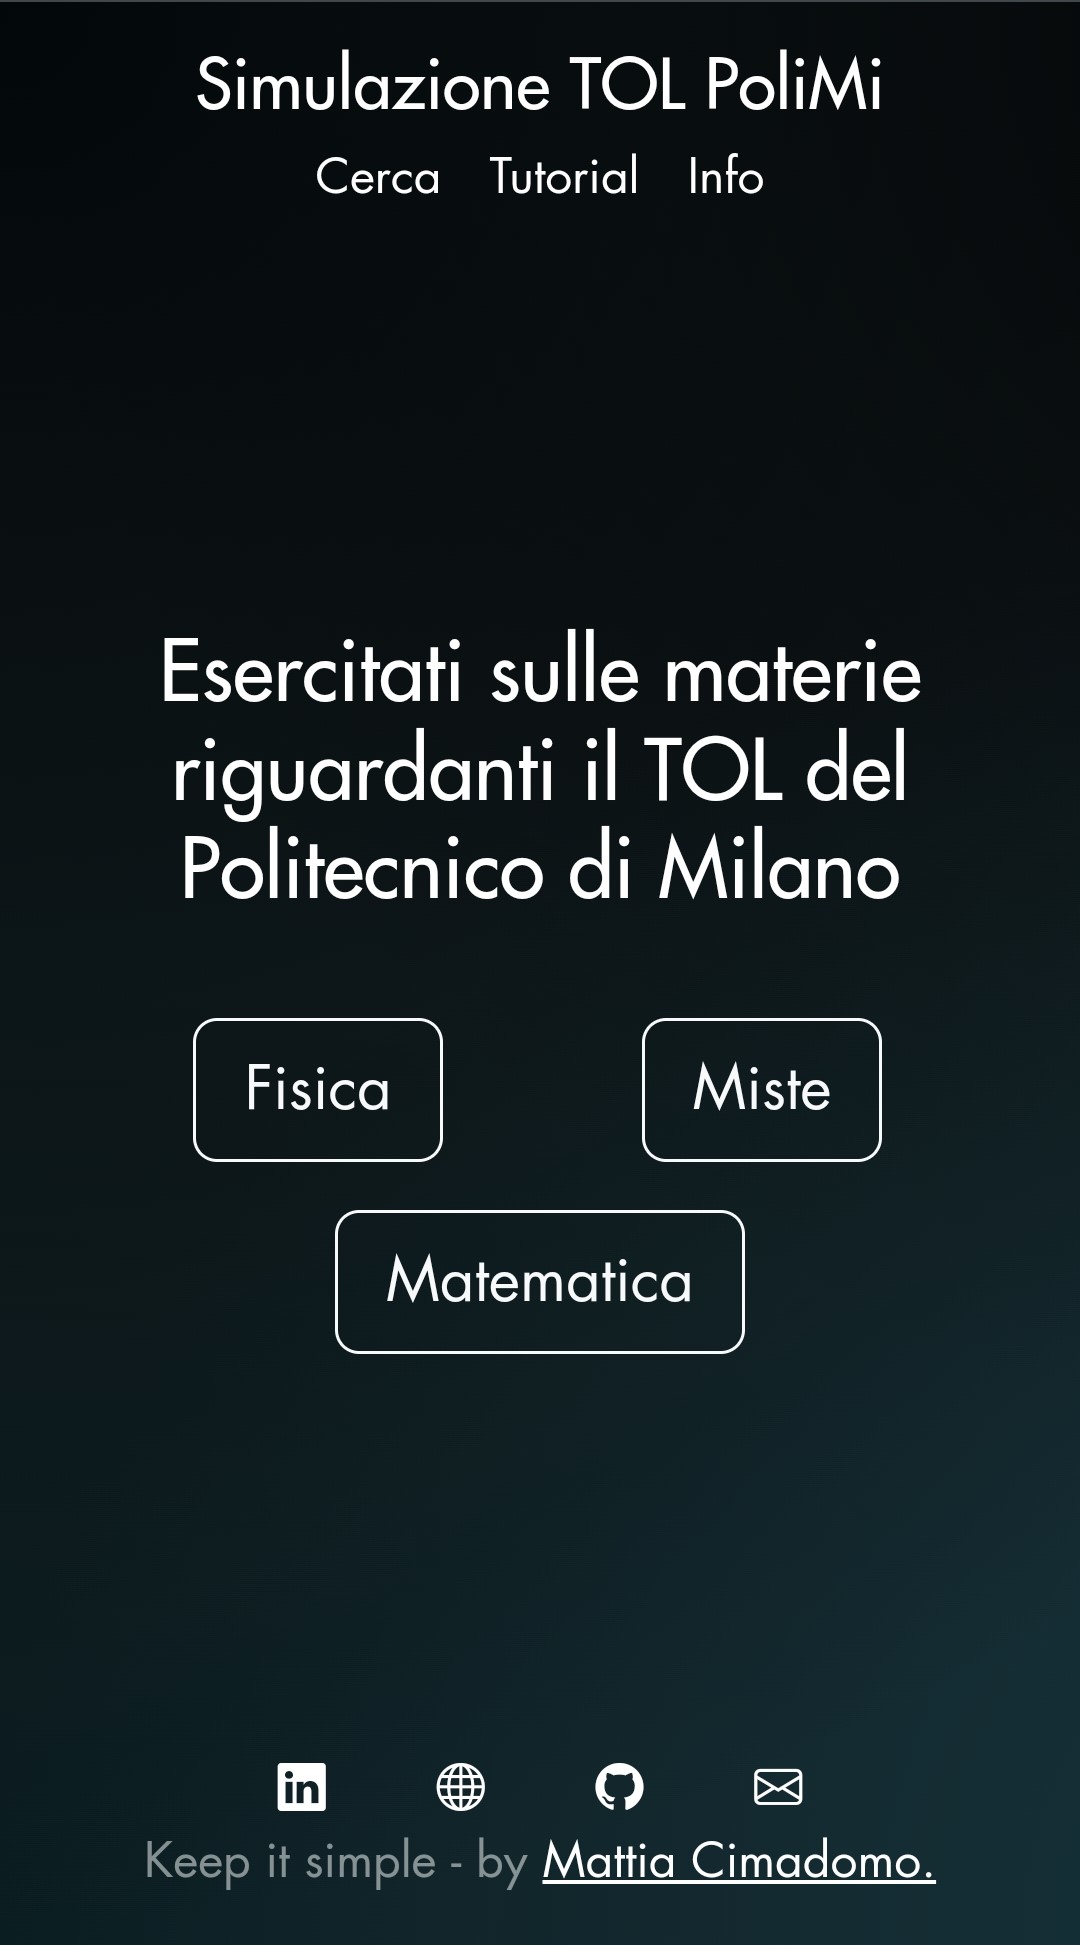 Image of Simulazione TOL's website